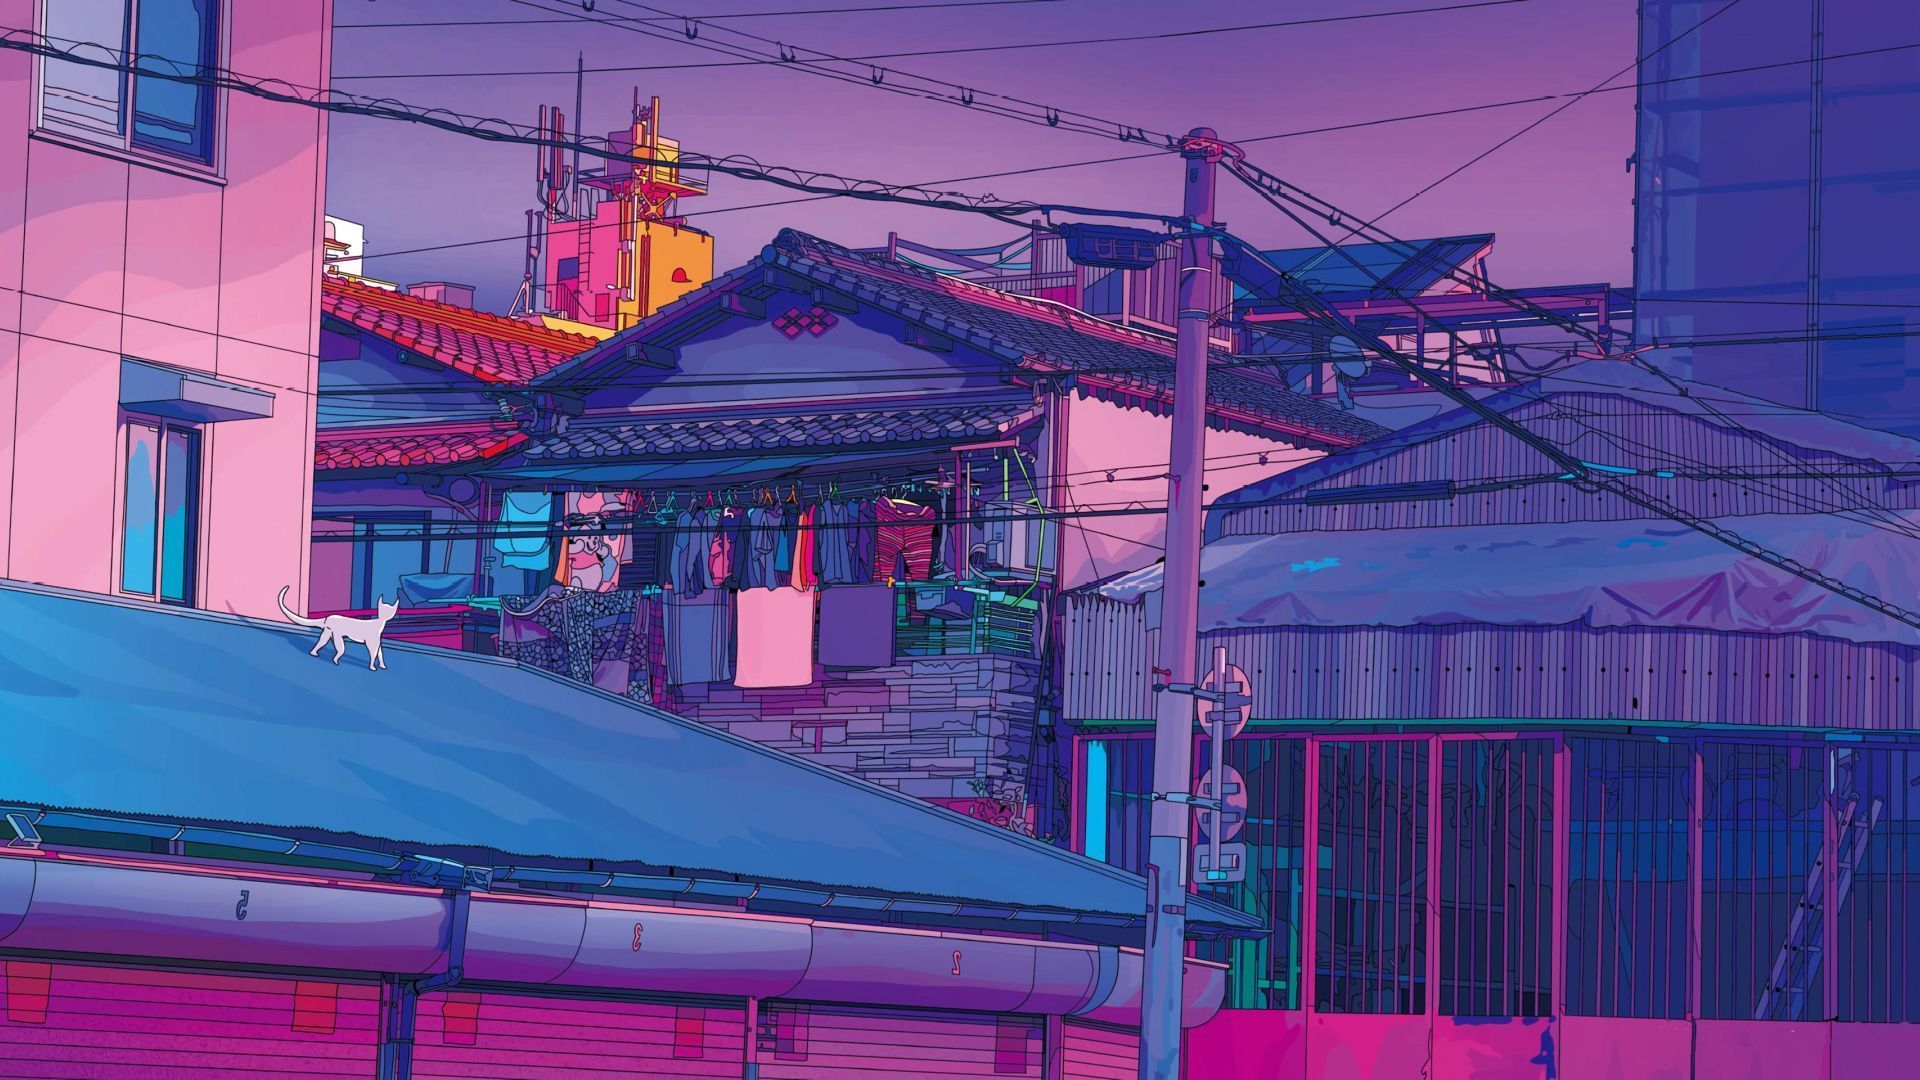 1920x1080 Hintergrundbild 1920x1080. Aesthetic Tokyo wallpaper in 1920x1080 resolution